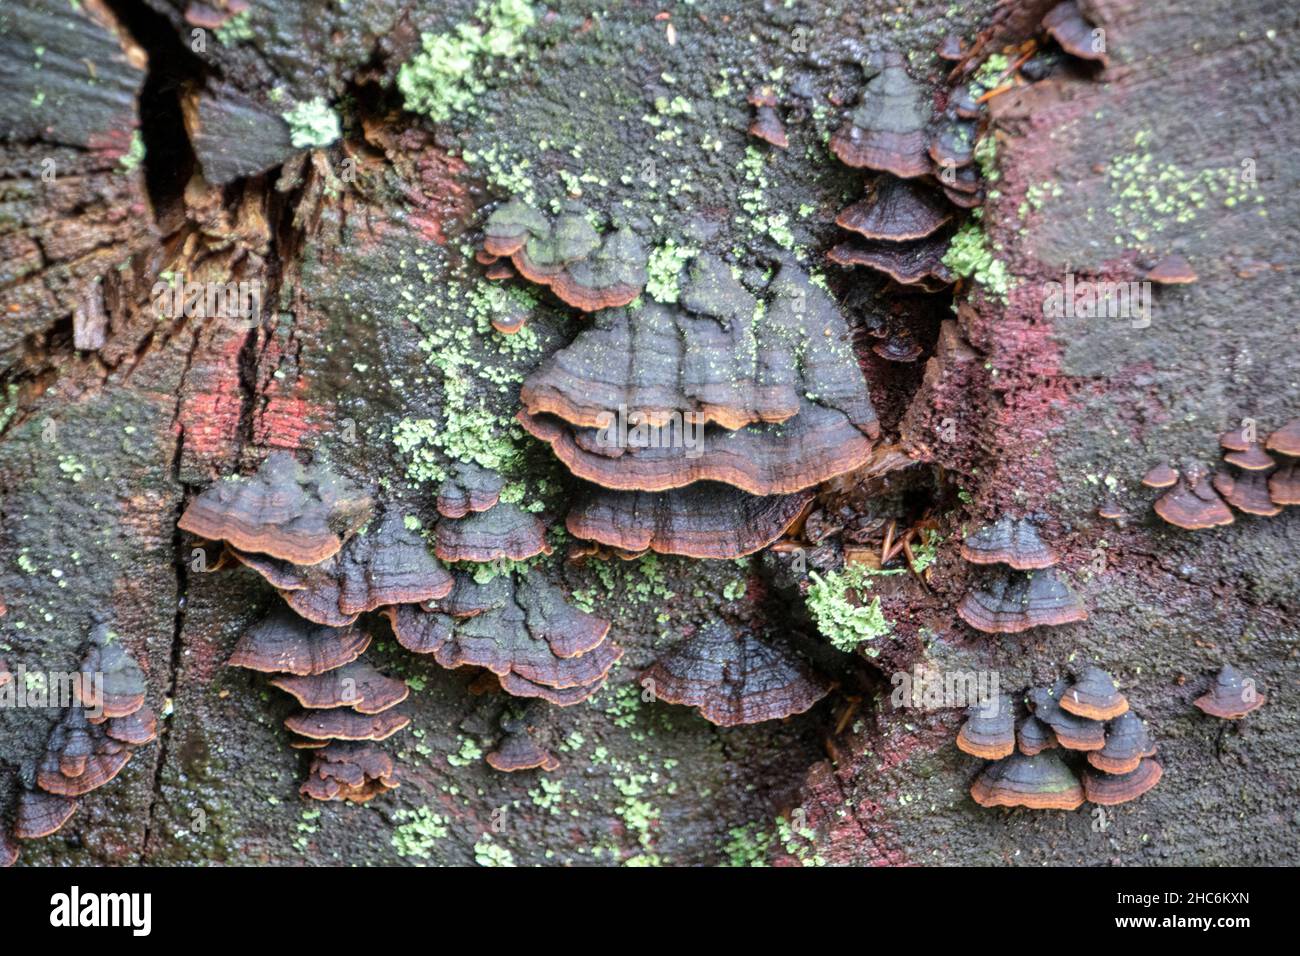 Hymenochaete rubiginosa oak curtain crust mushroom growing on tree in Palatinate Forest Stock Photo